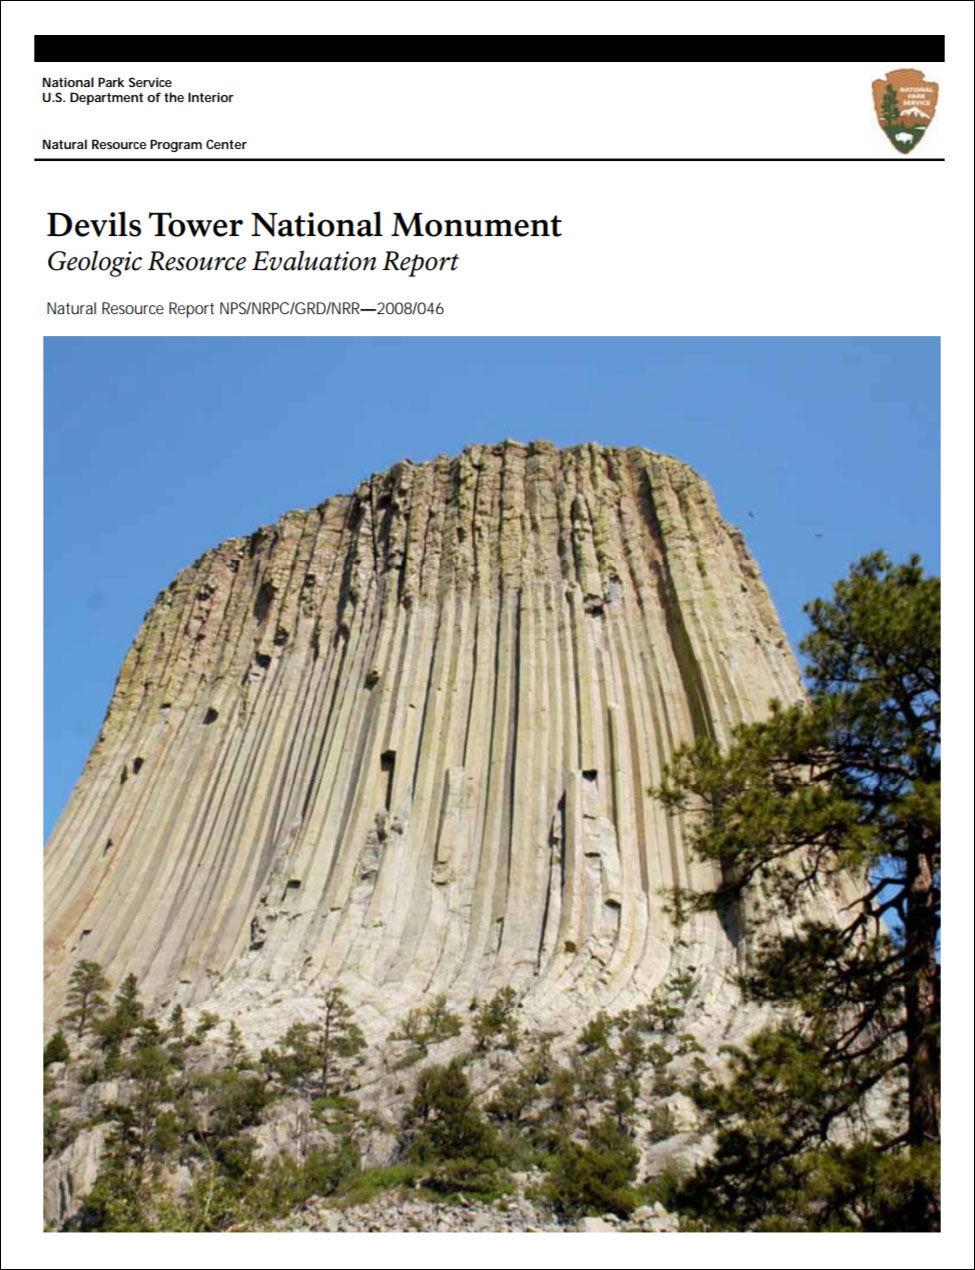 Nps Geodiversity Atlas—Devils Tower National Monument, Wyoming (U.S.  National Park Service)